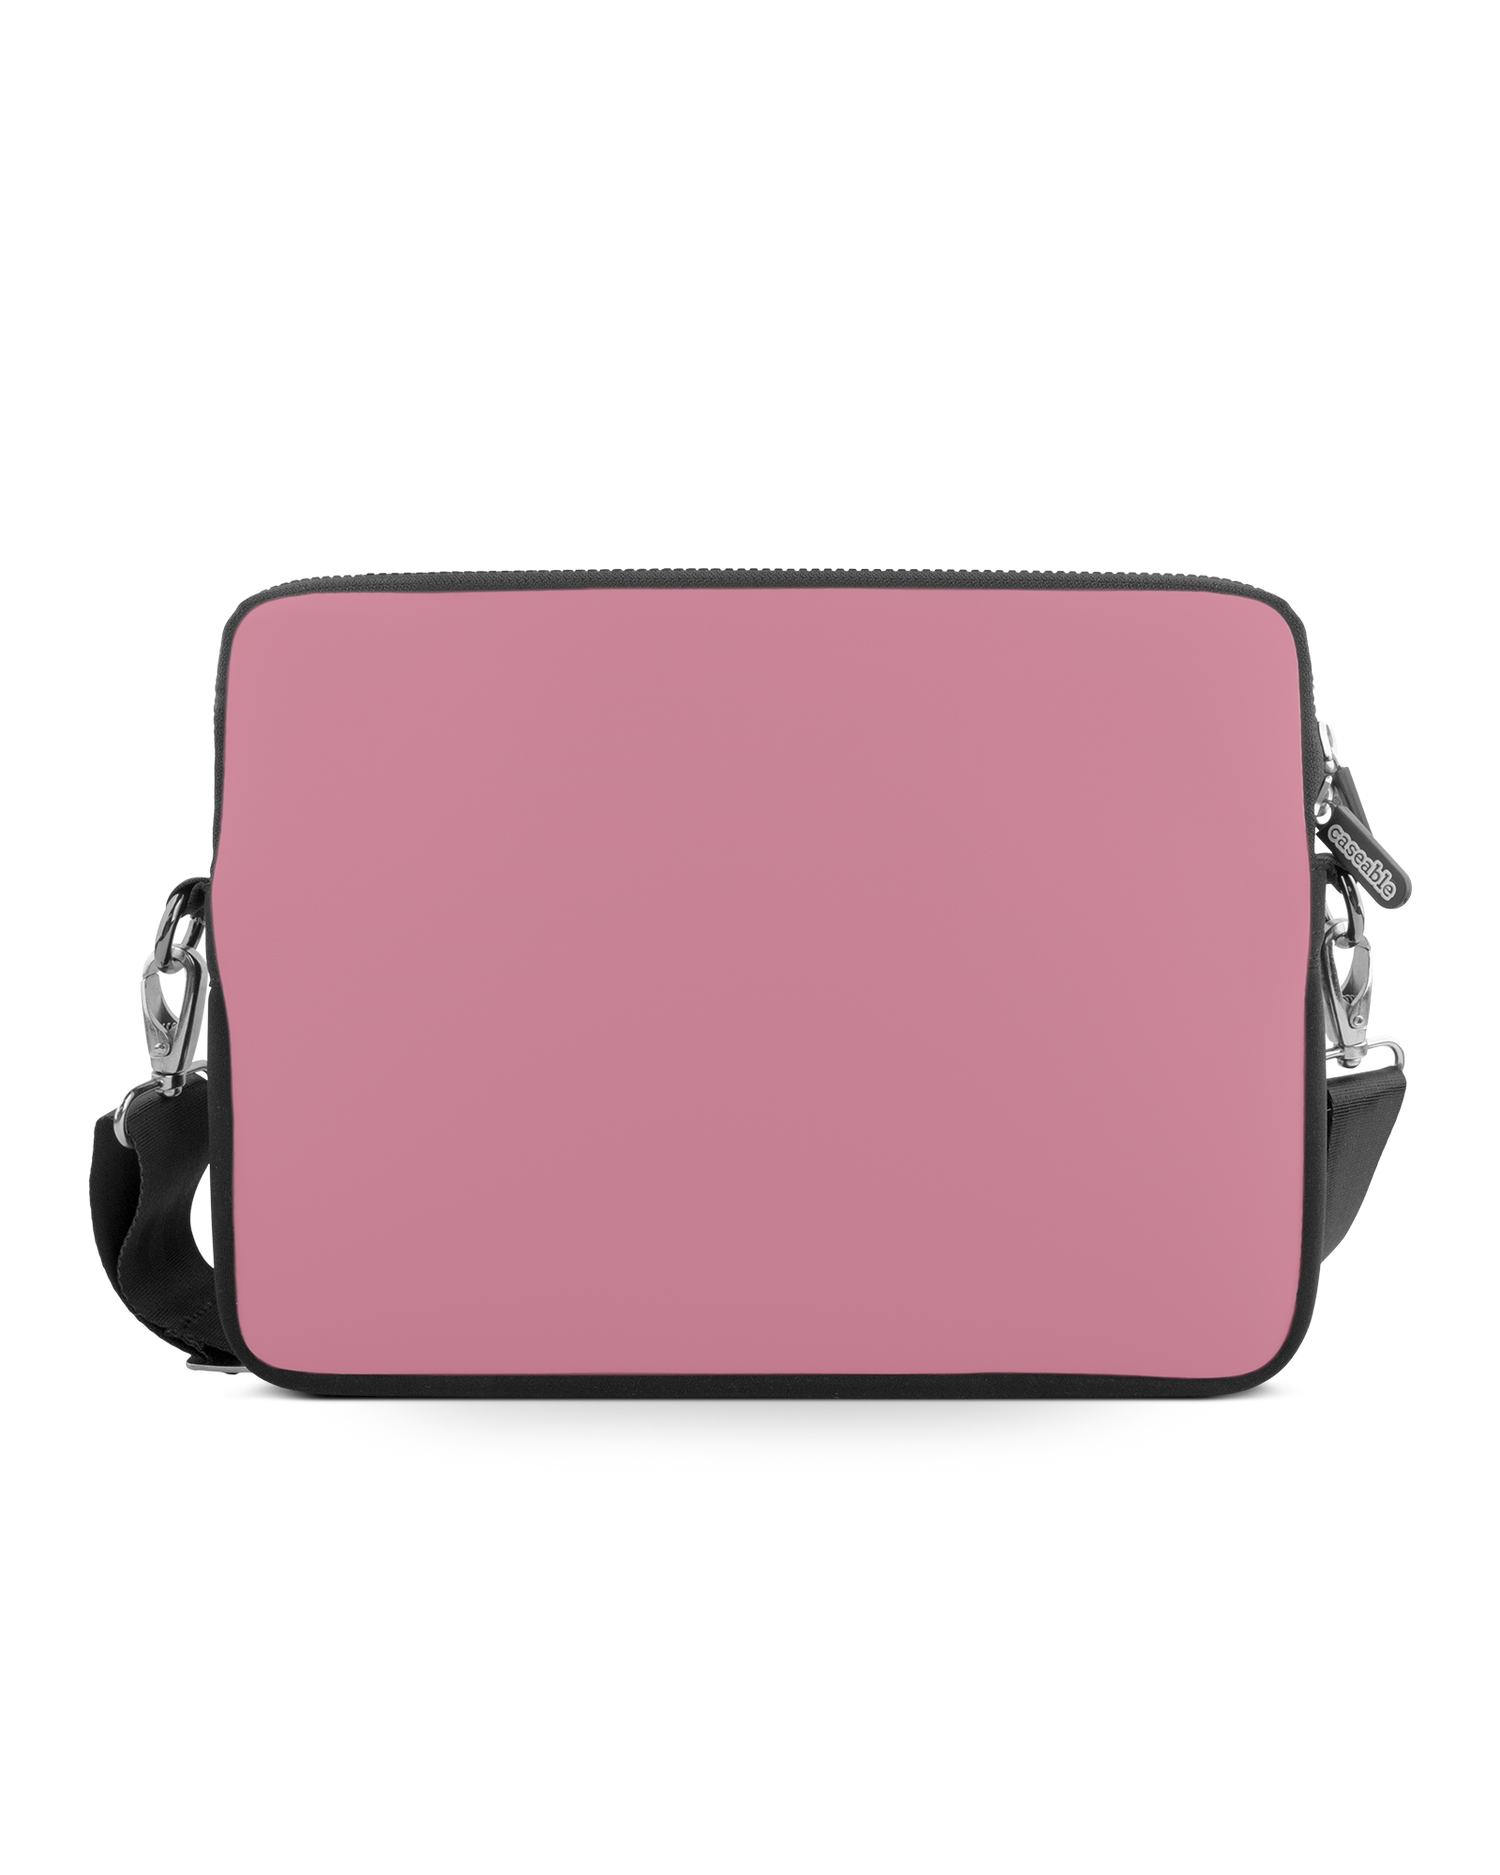 WILD ROSE Premium Laptop Bag 15 inch: Front View